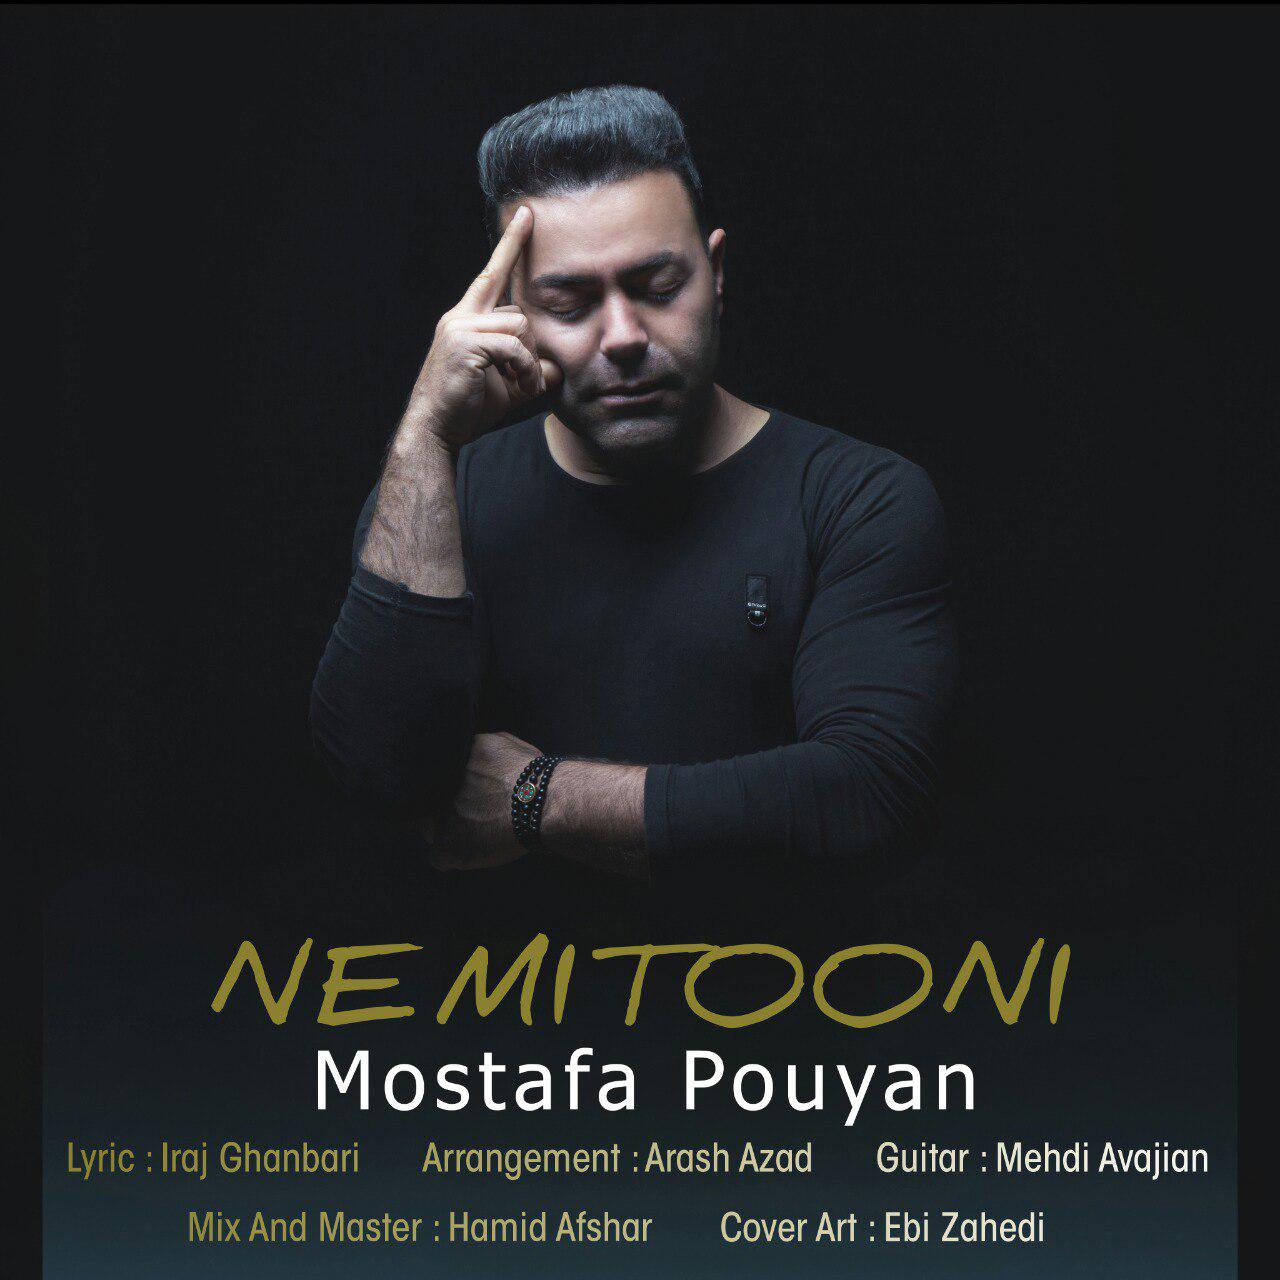 Mostafa Pouyan – Nemitooni